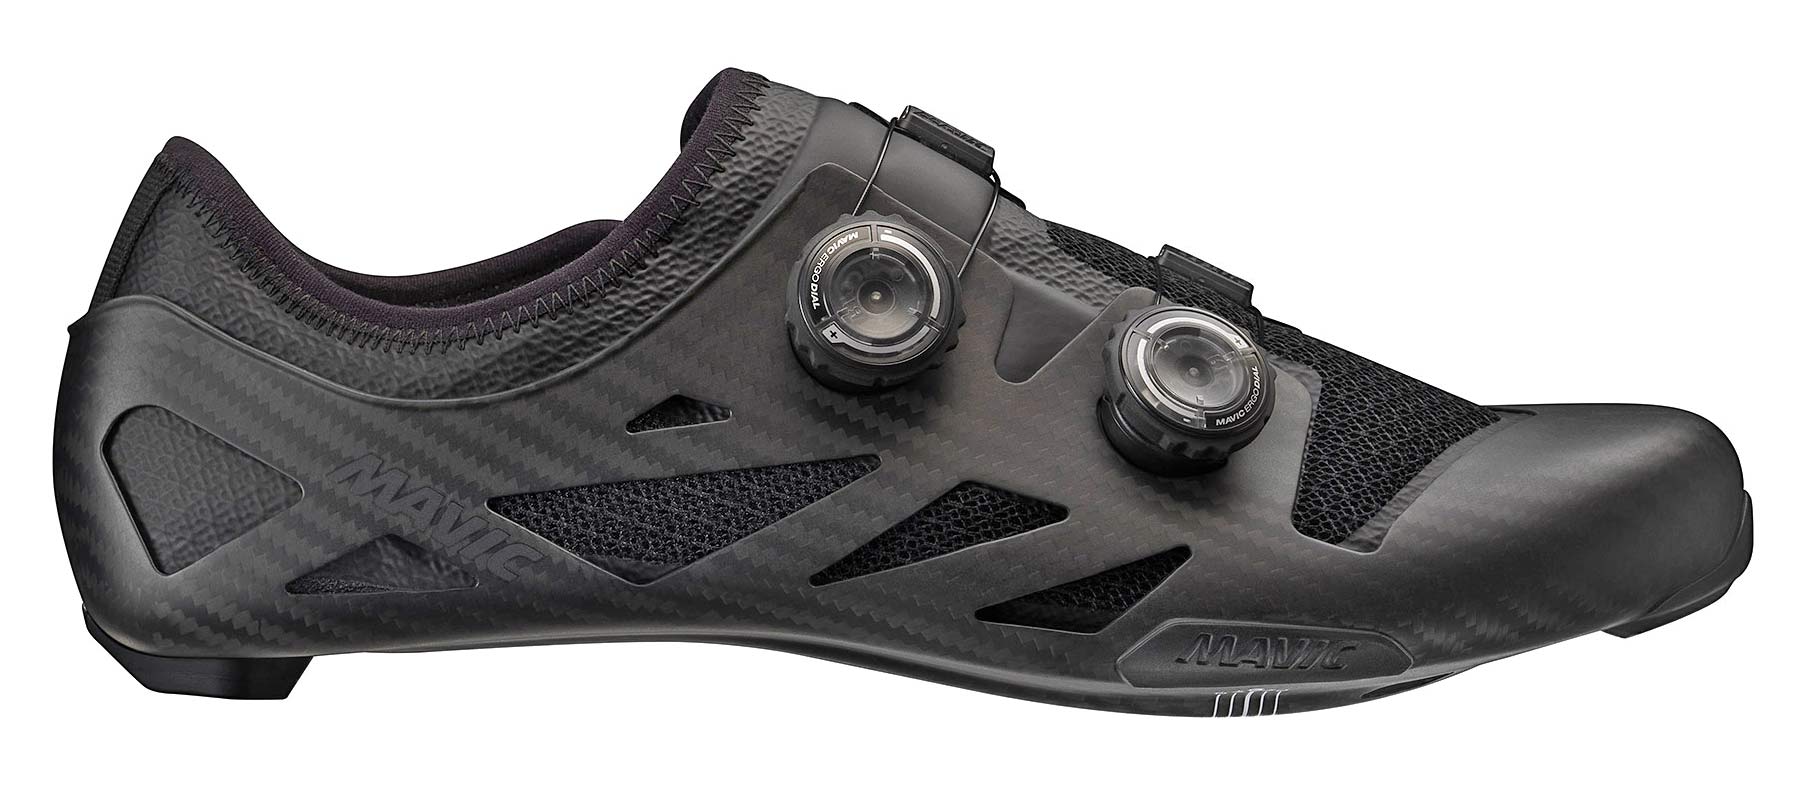 2020 Mavic Comete Ultimate v2 road shoes, ultra stiff lightweight carbon exoskeleton road bike shoes